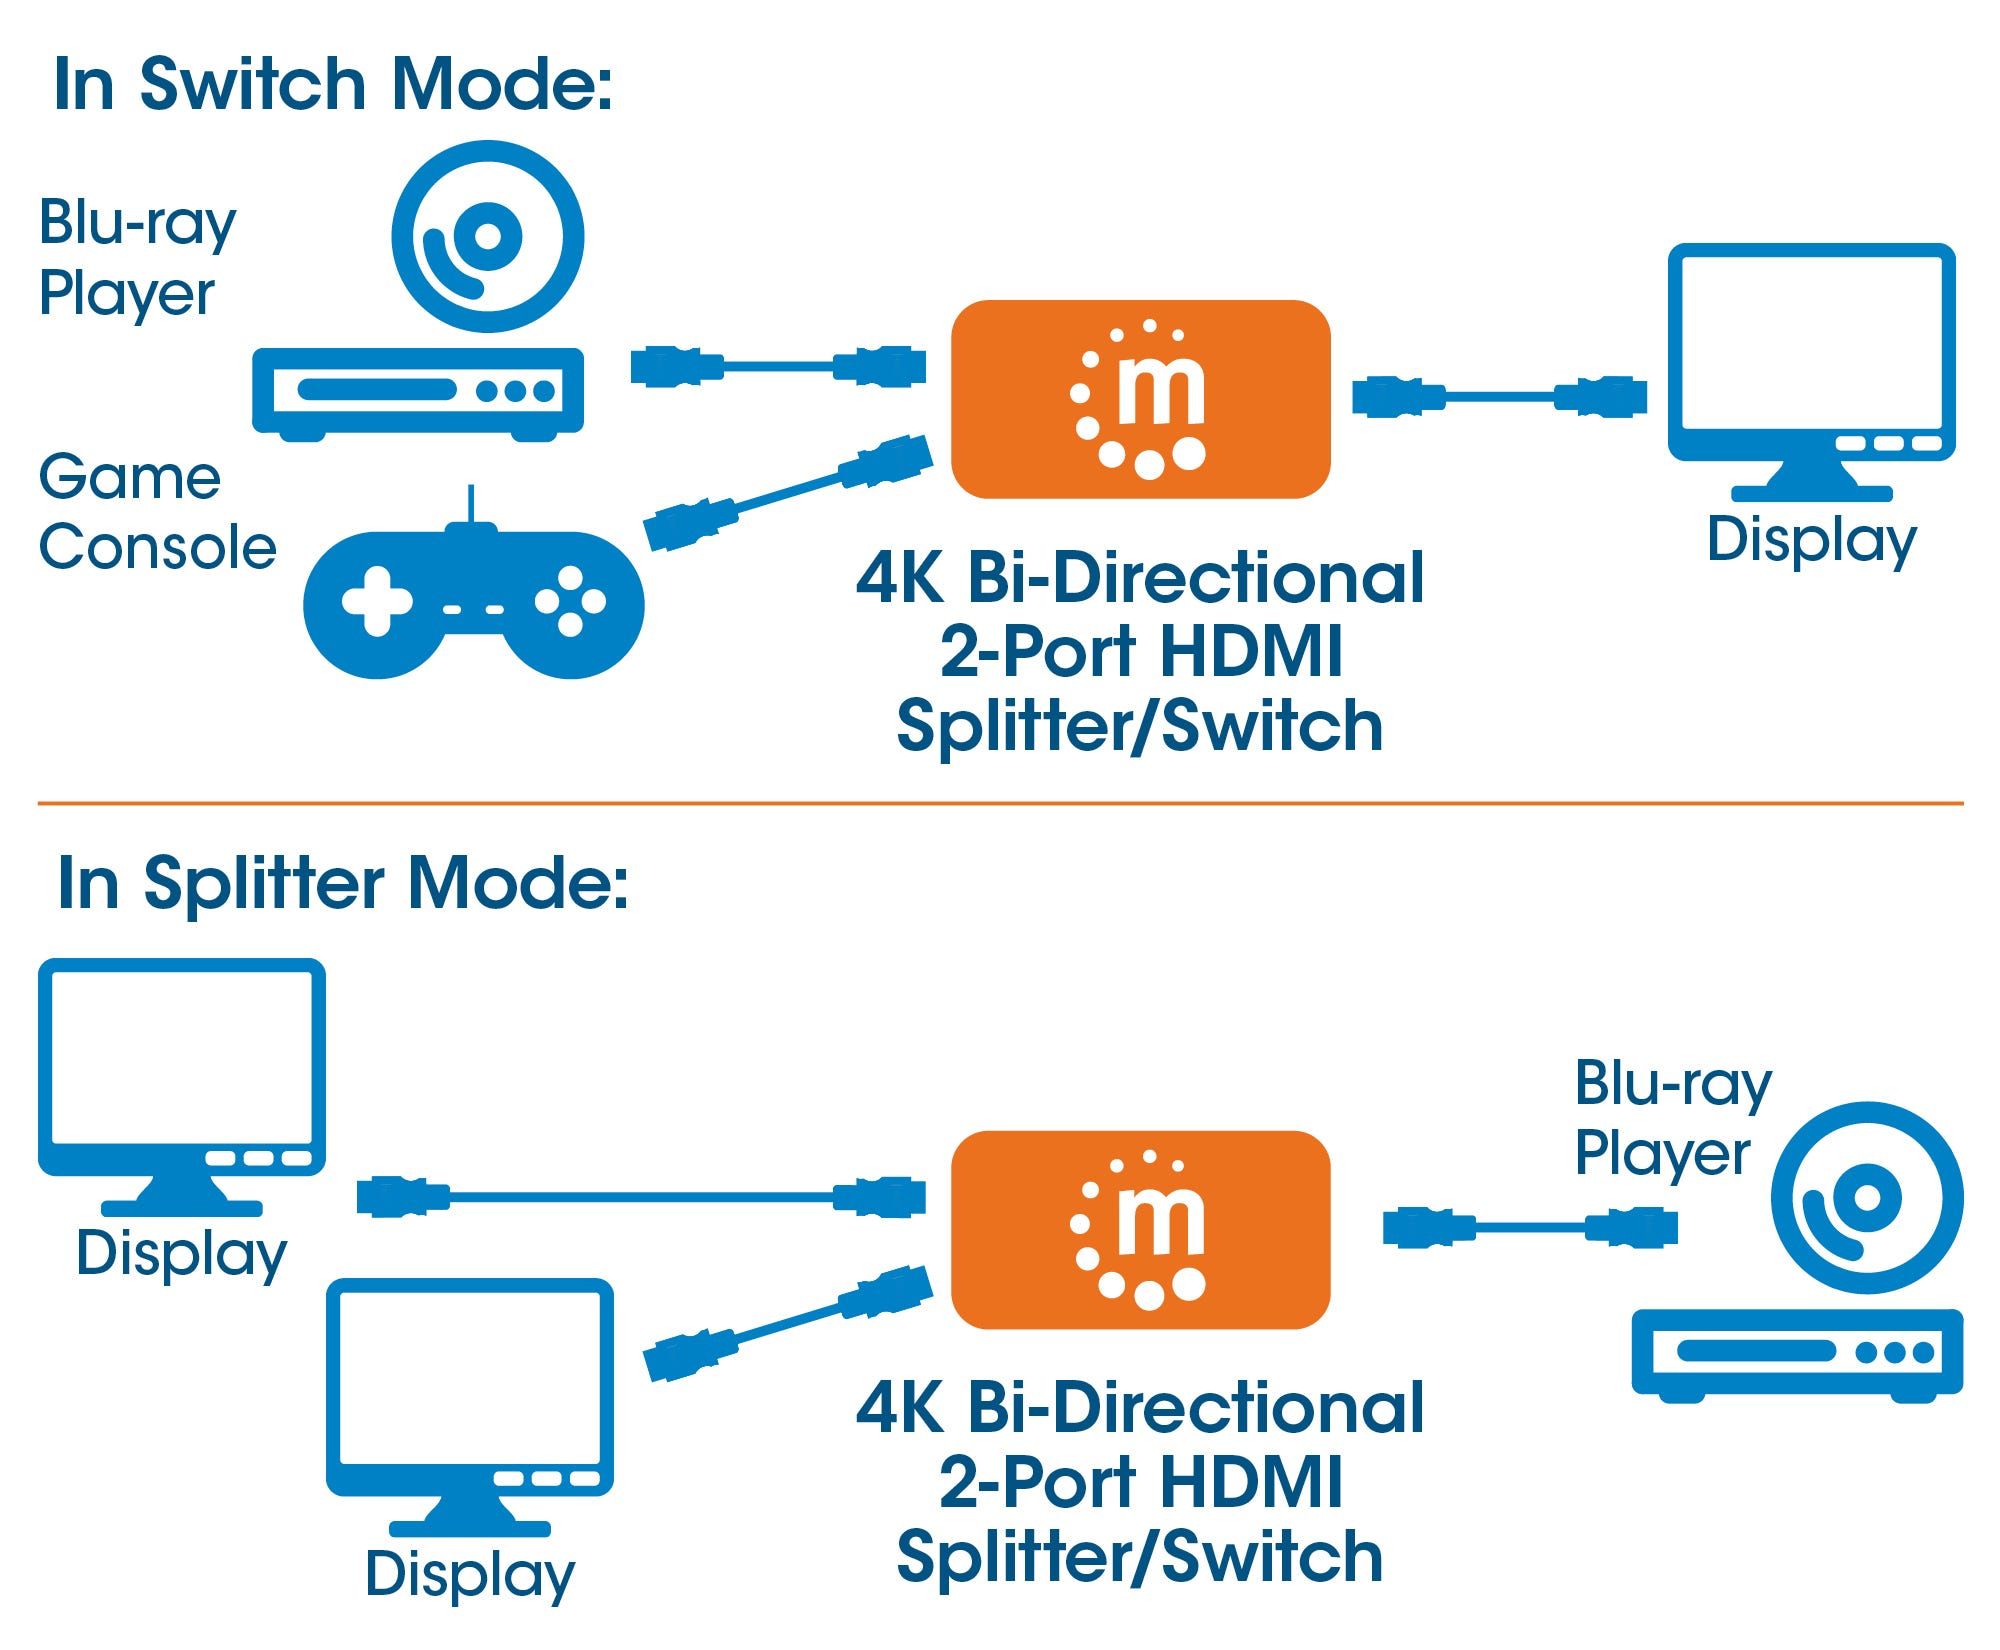 Manhattan HDMI Switch 2-Port, 4K@30Hz, Bi-Directional, Black, Displays output from x1 HDMI source to x2 HD displays (same output to both displays)